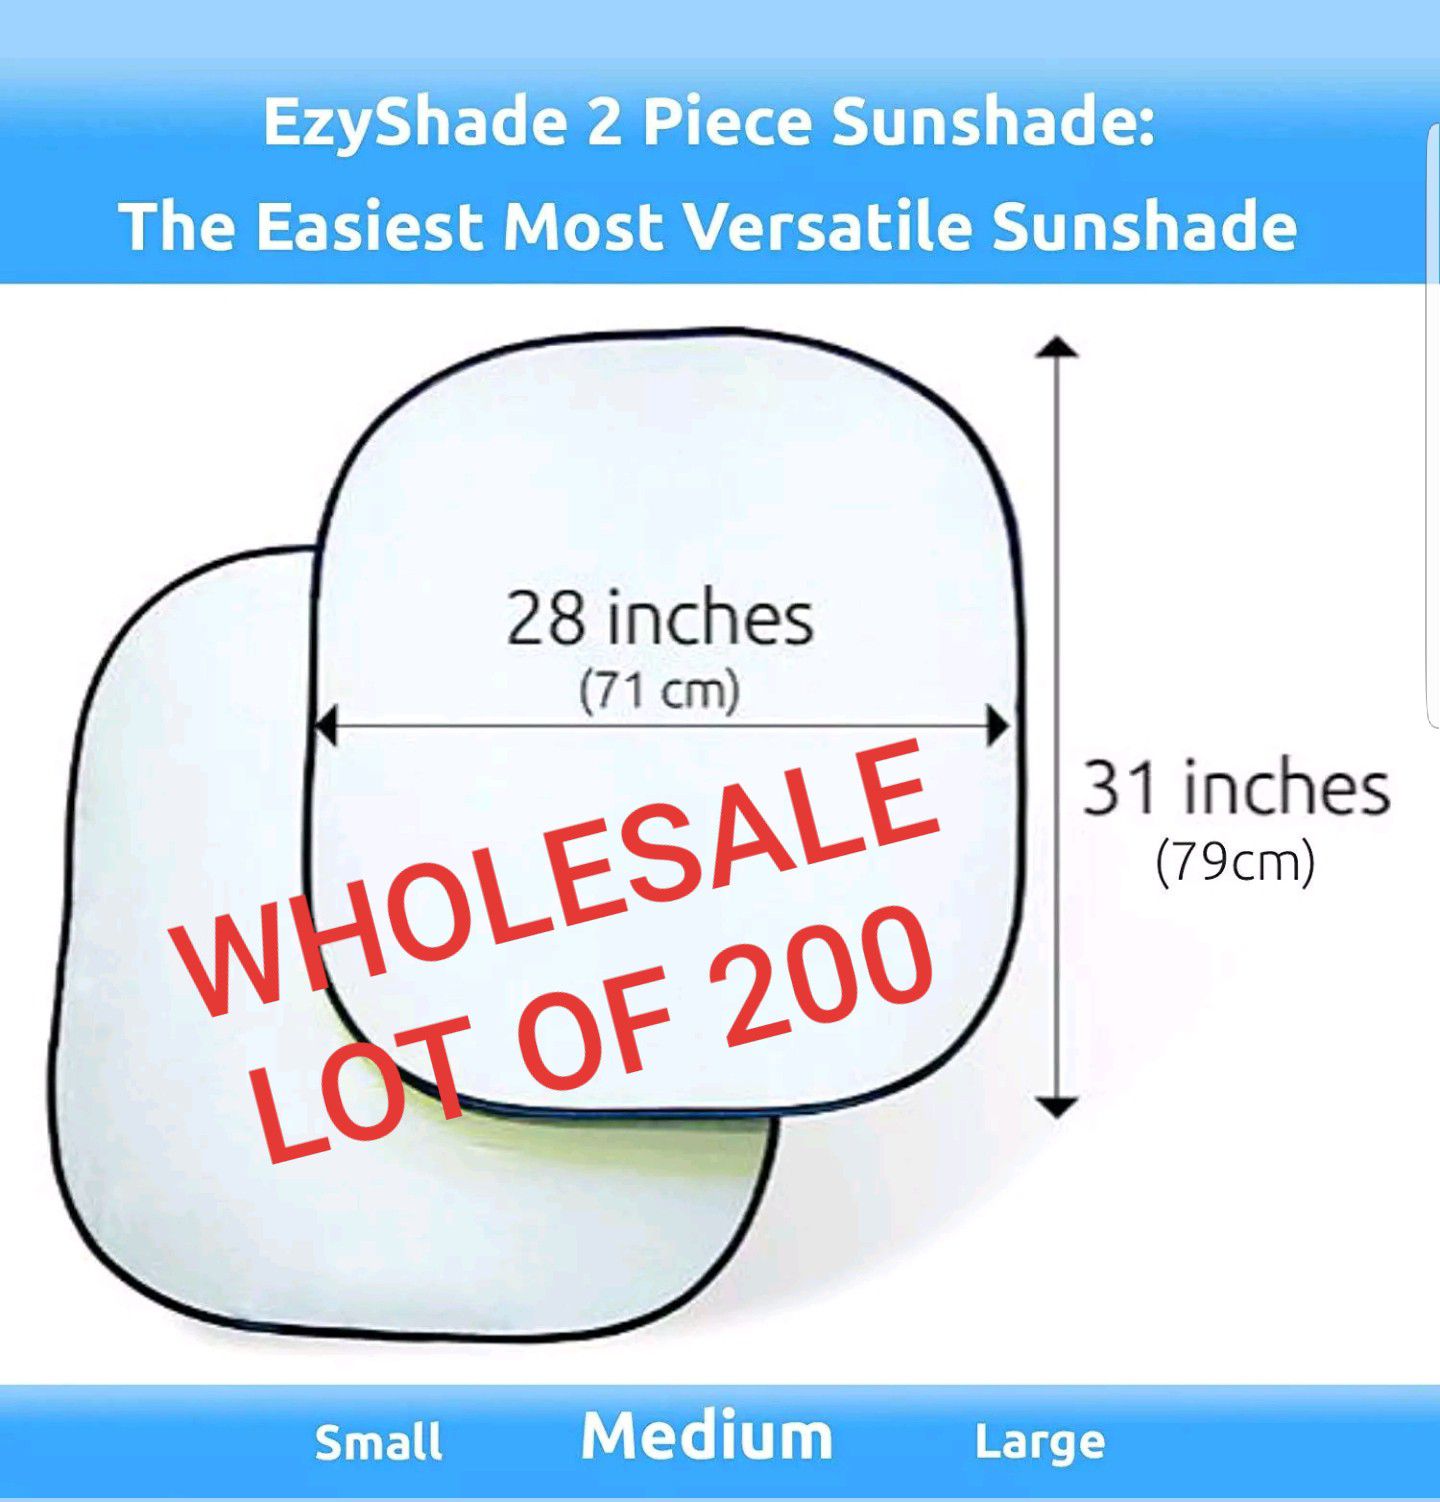 Wholesale Lot of 200 Ezy Shade UV Sun & Reflector Car Windshield Shades- Standard Size